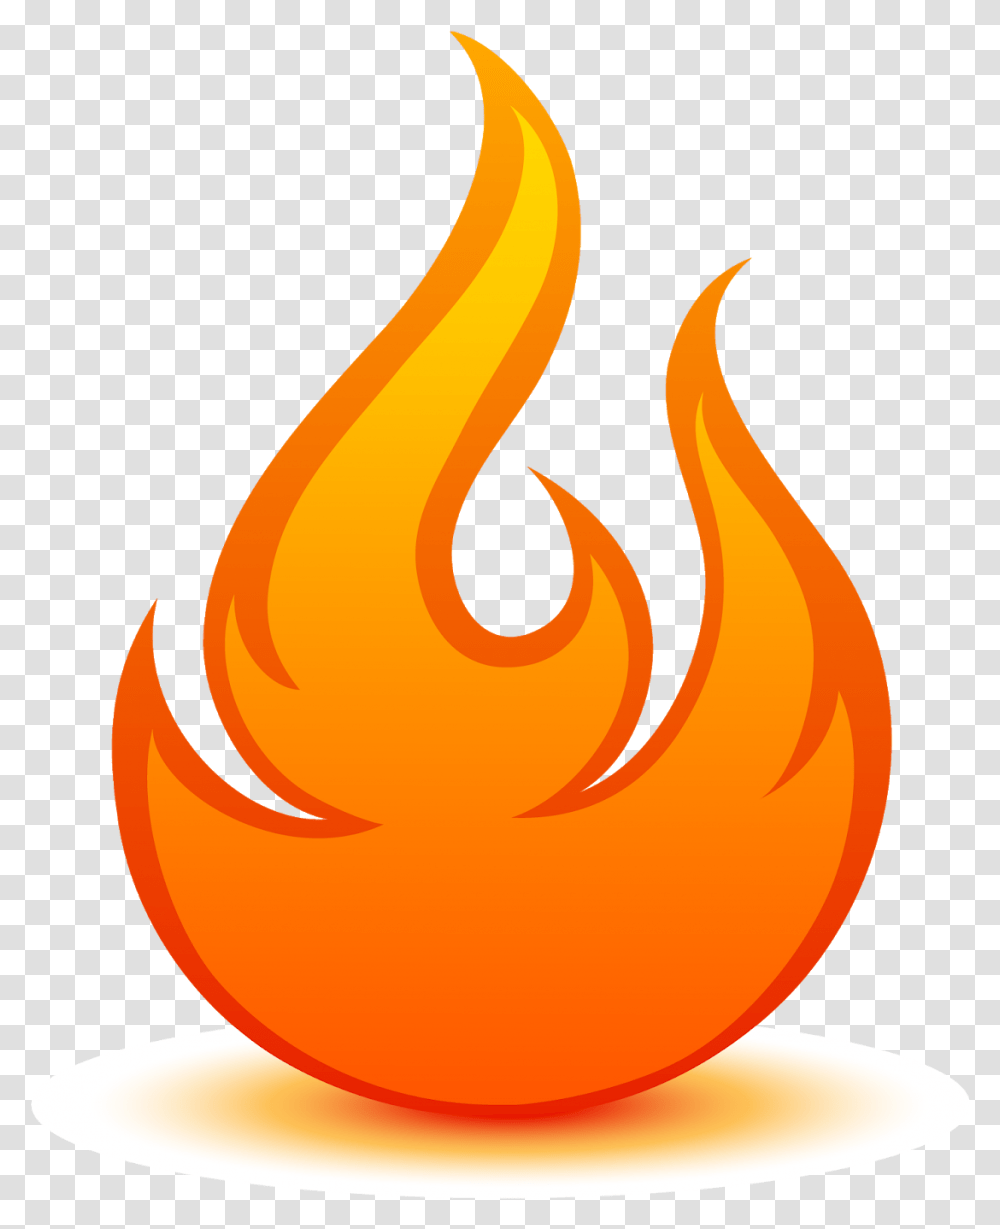 Fire Images Fire Image Logo Hot Wheels Hot Wheel Fire Ring, Flame, Bonfire Transparent Png